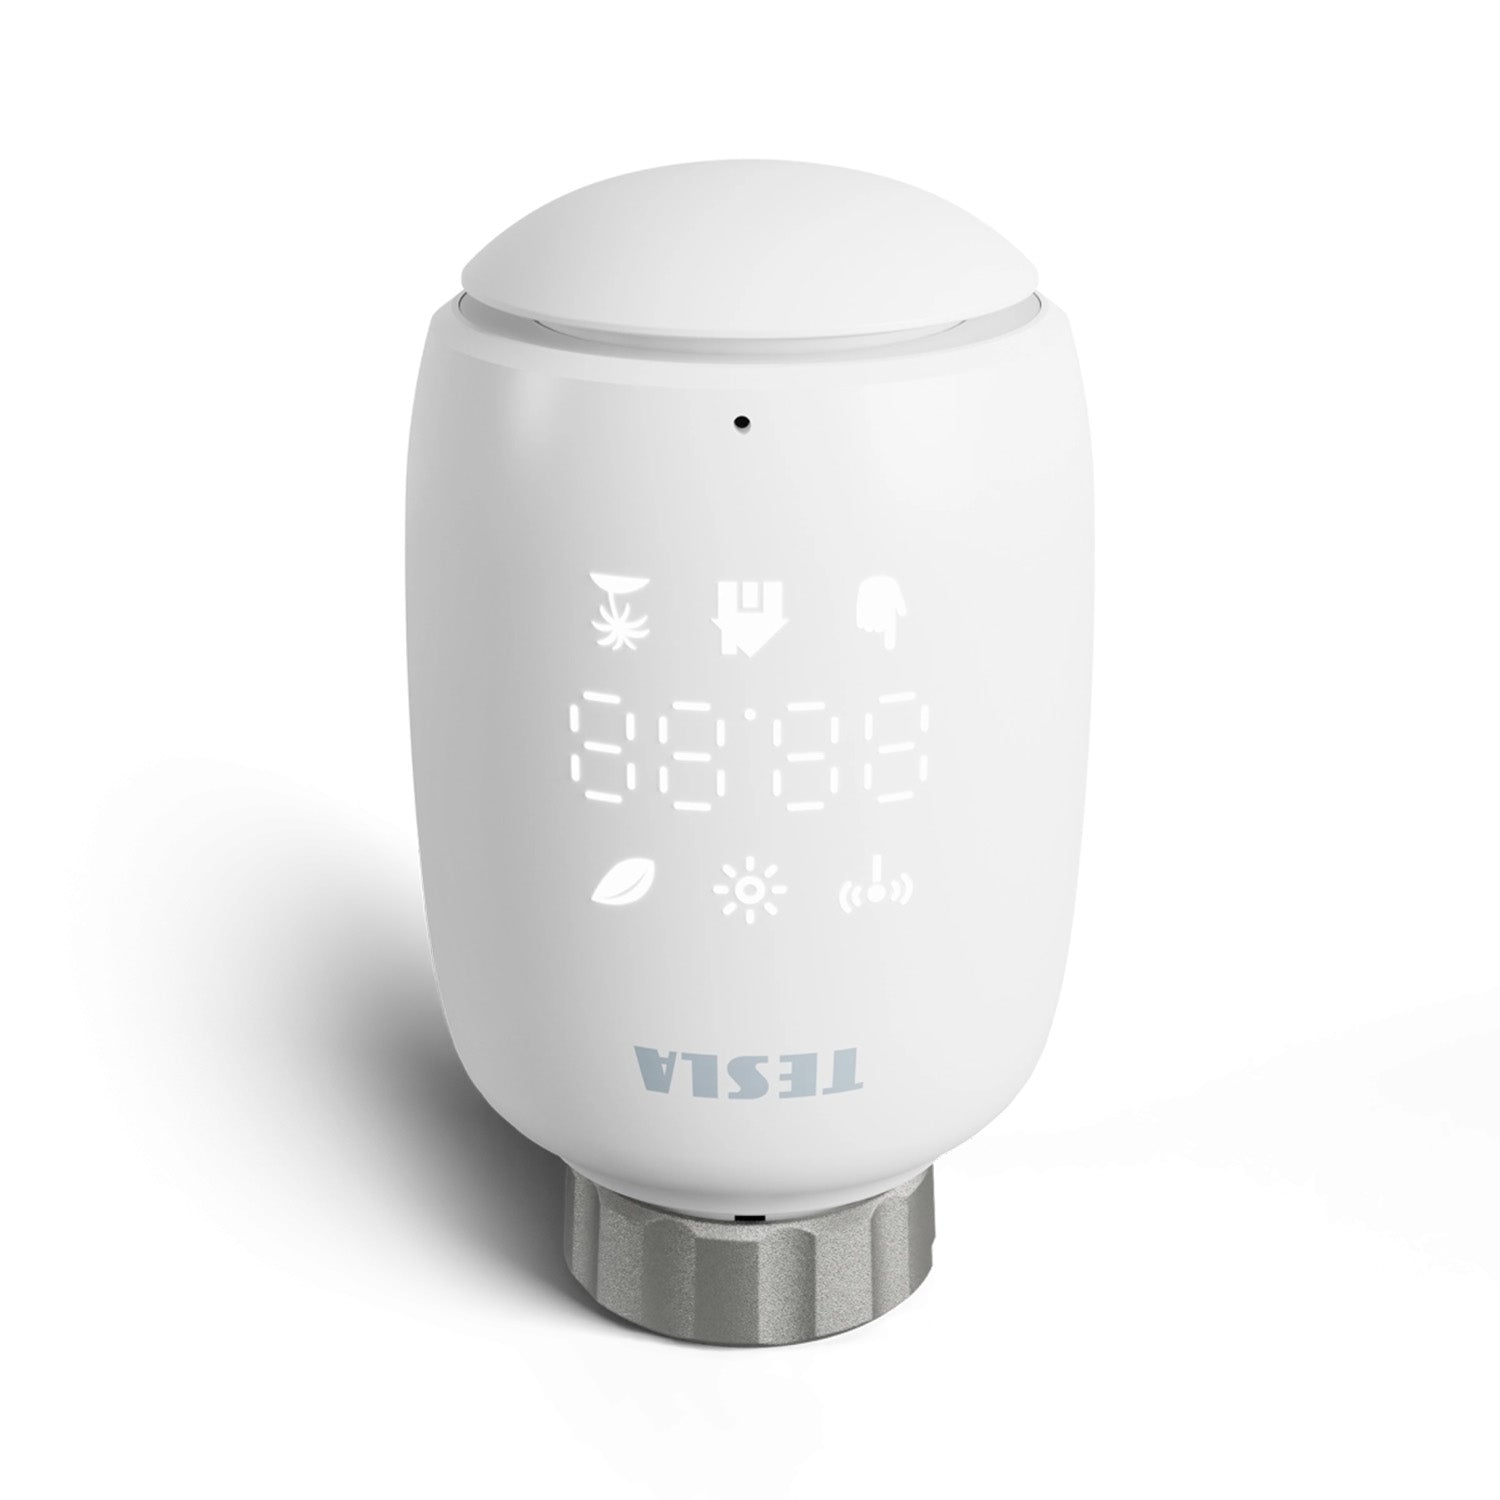 TESLA Smart Home Smart Thermostatic Valve TV500